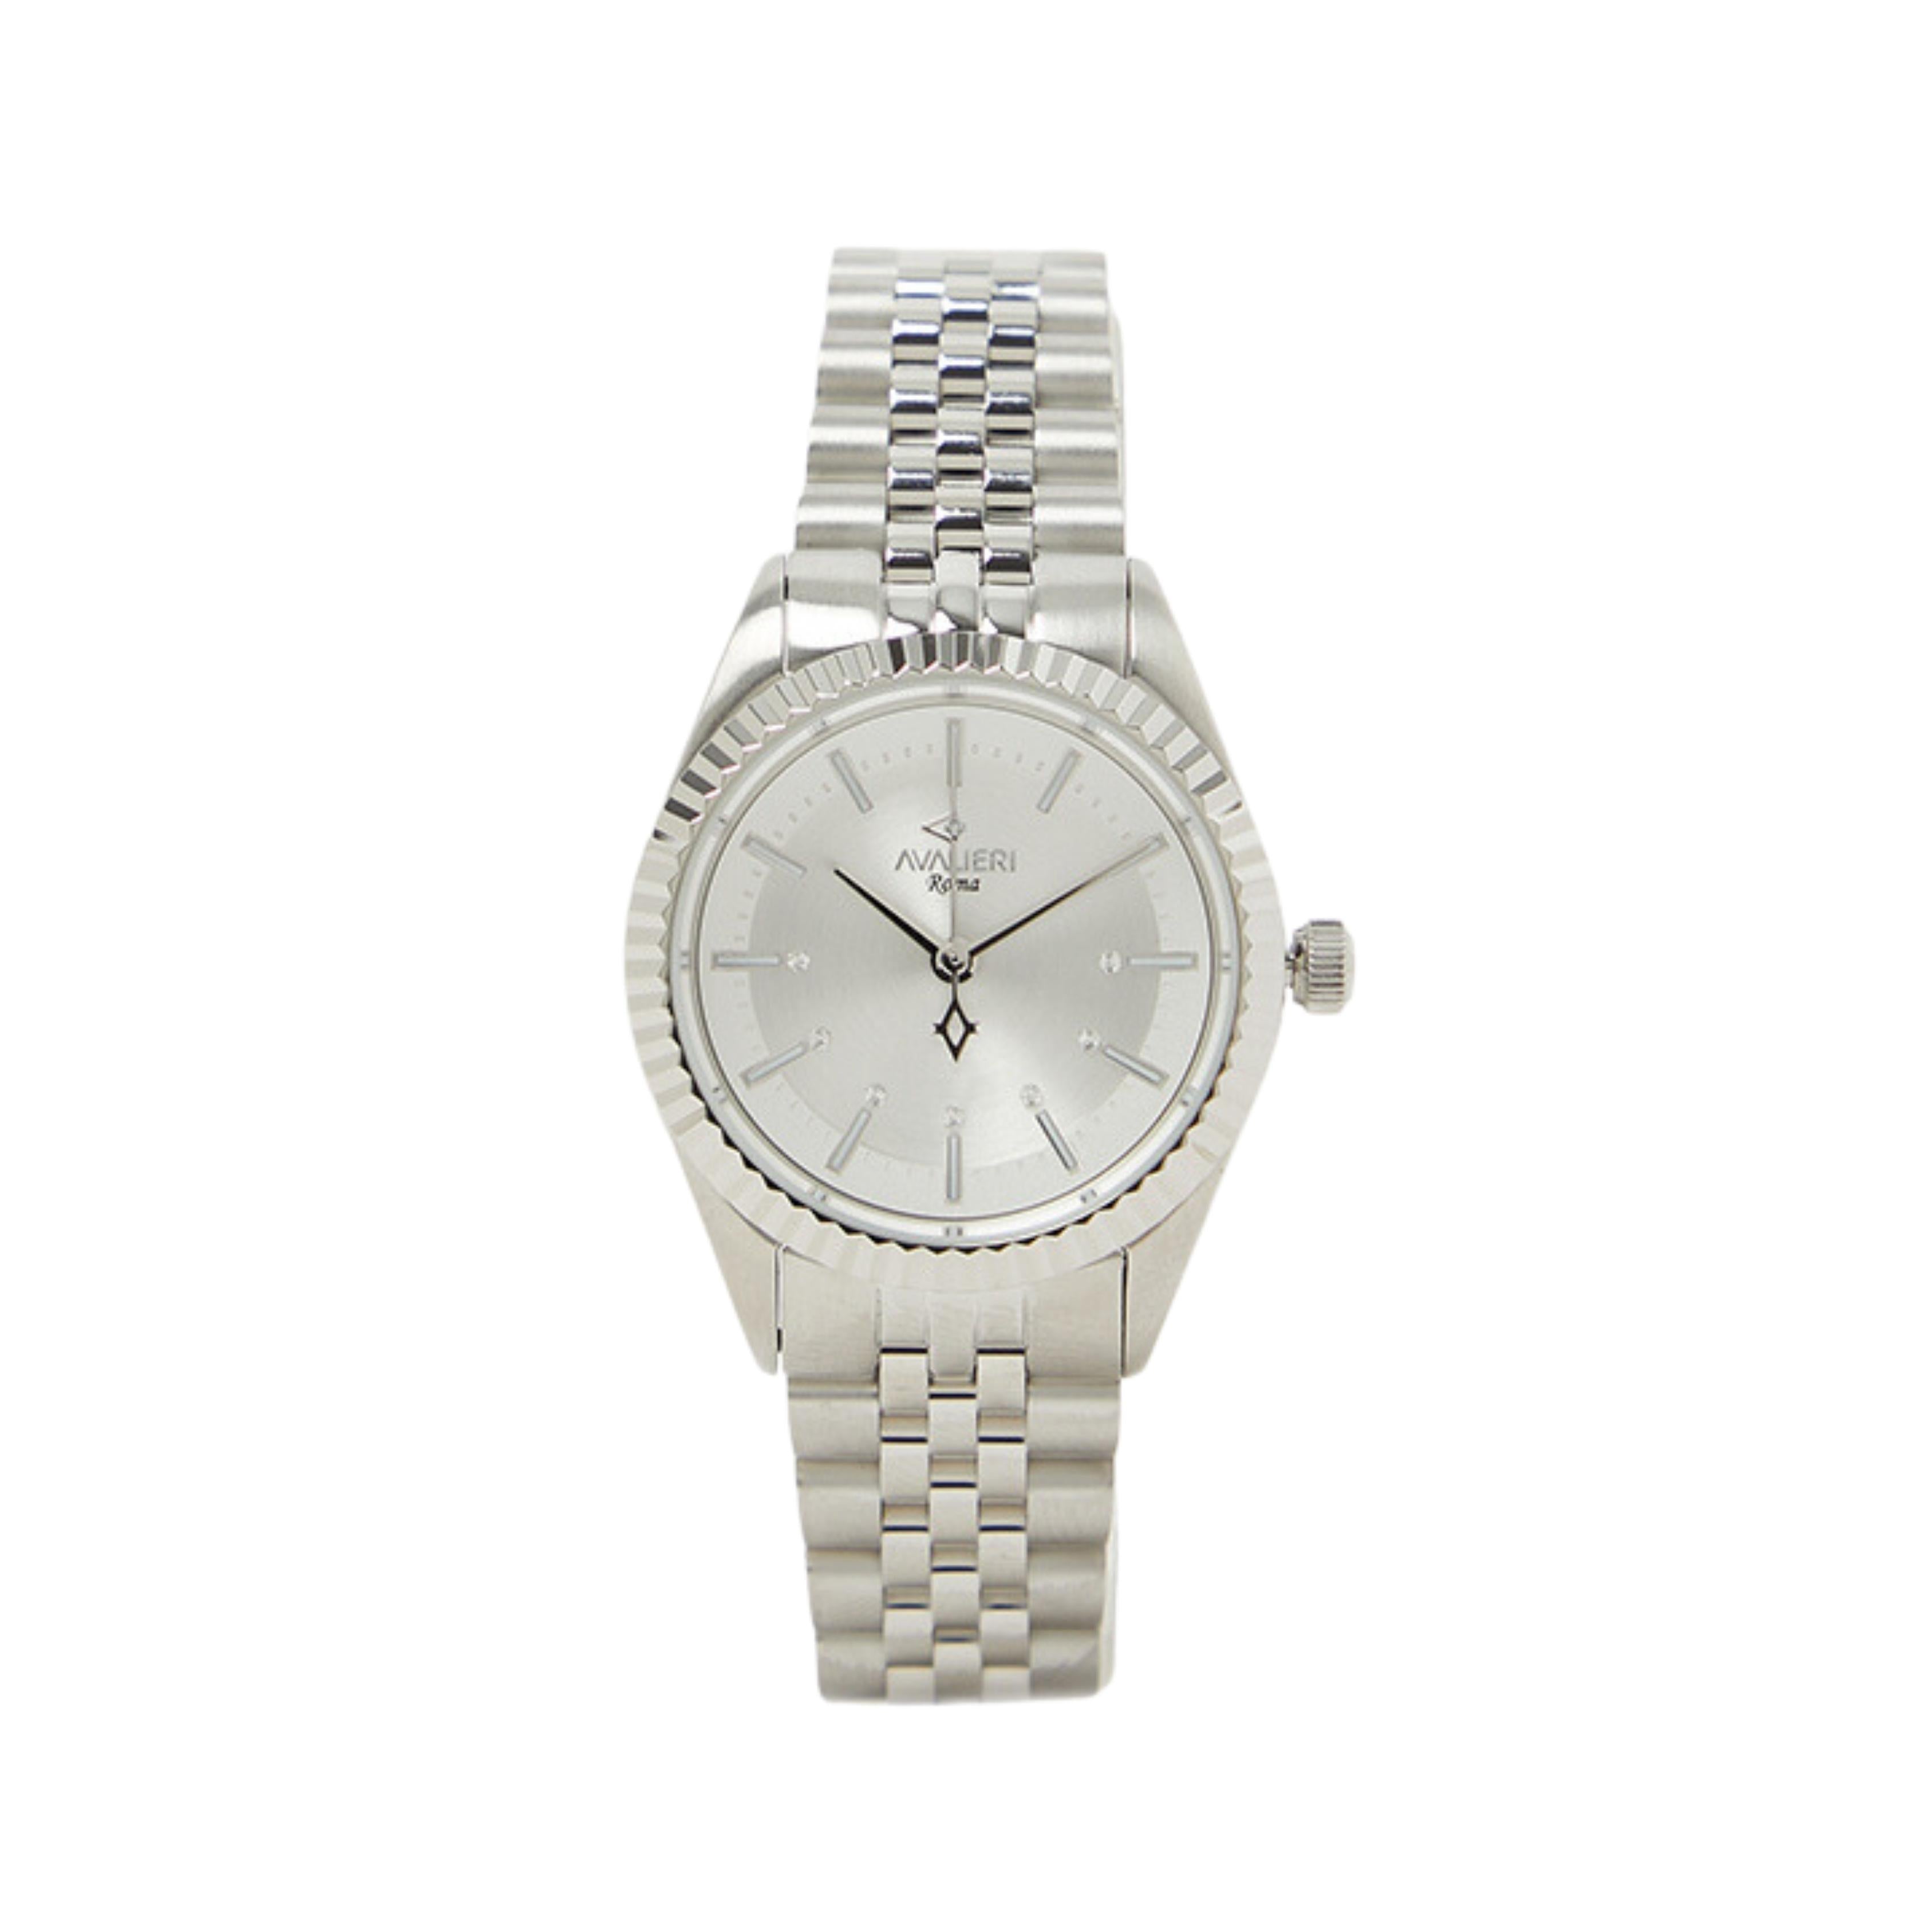 Avalieri Women's Quartz Watch With Silver White Dial - AV-2603B